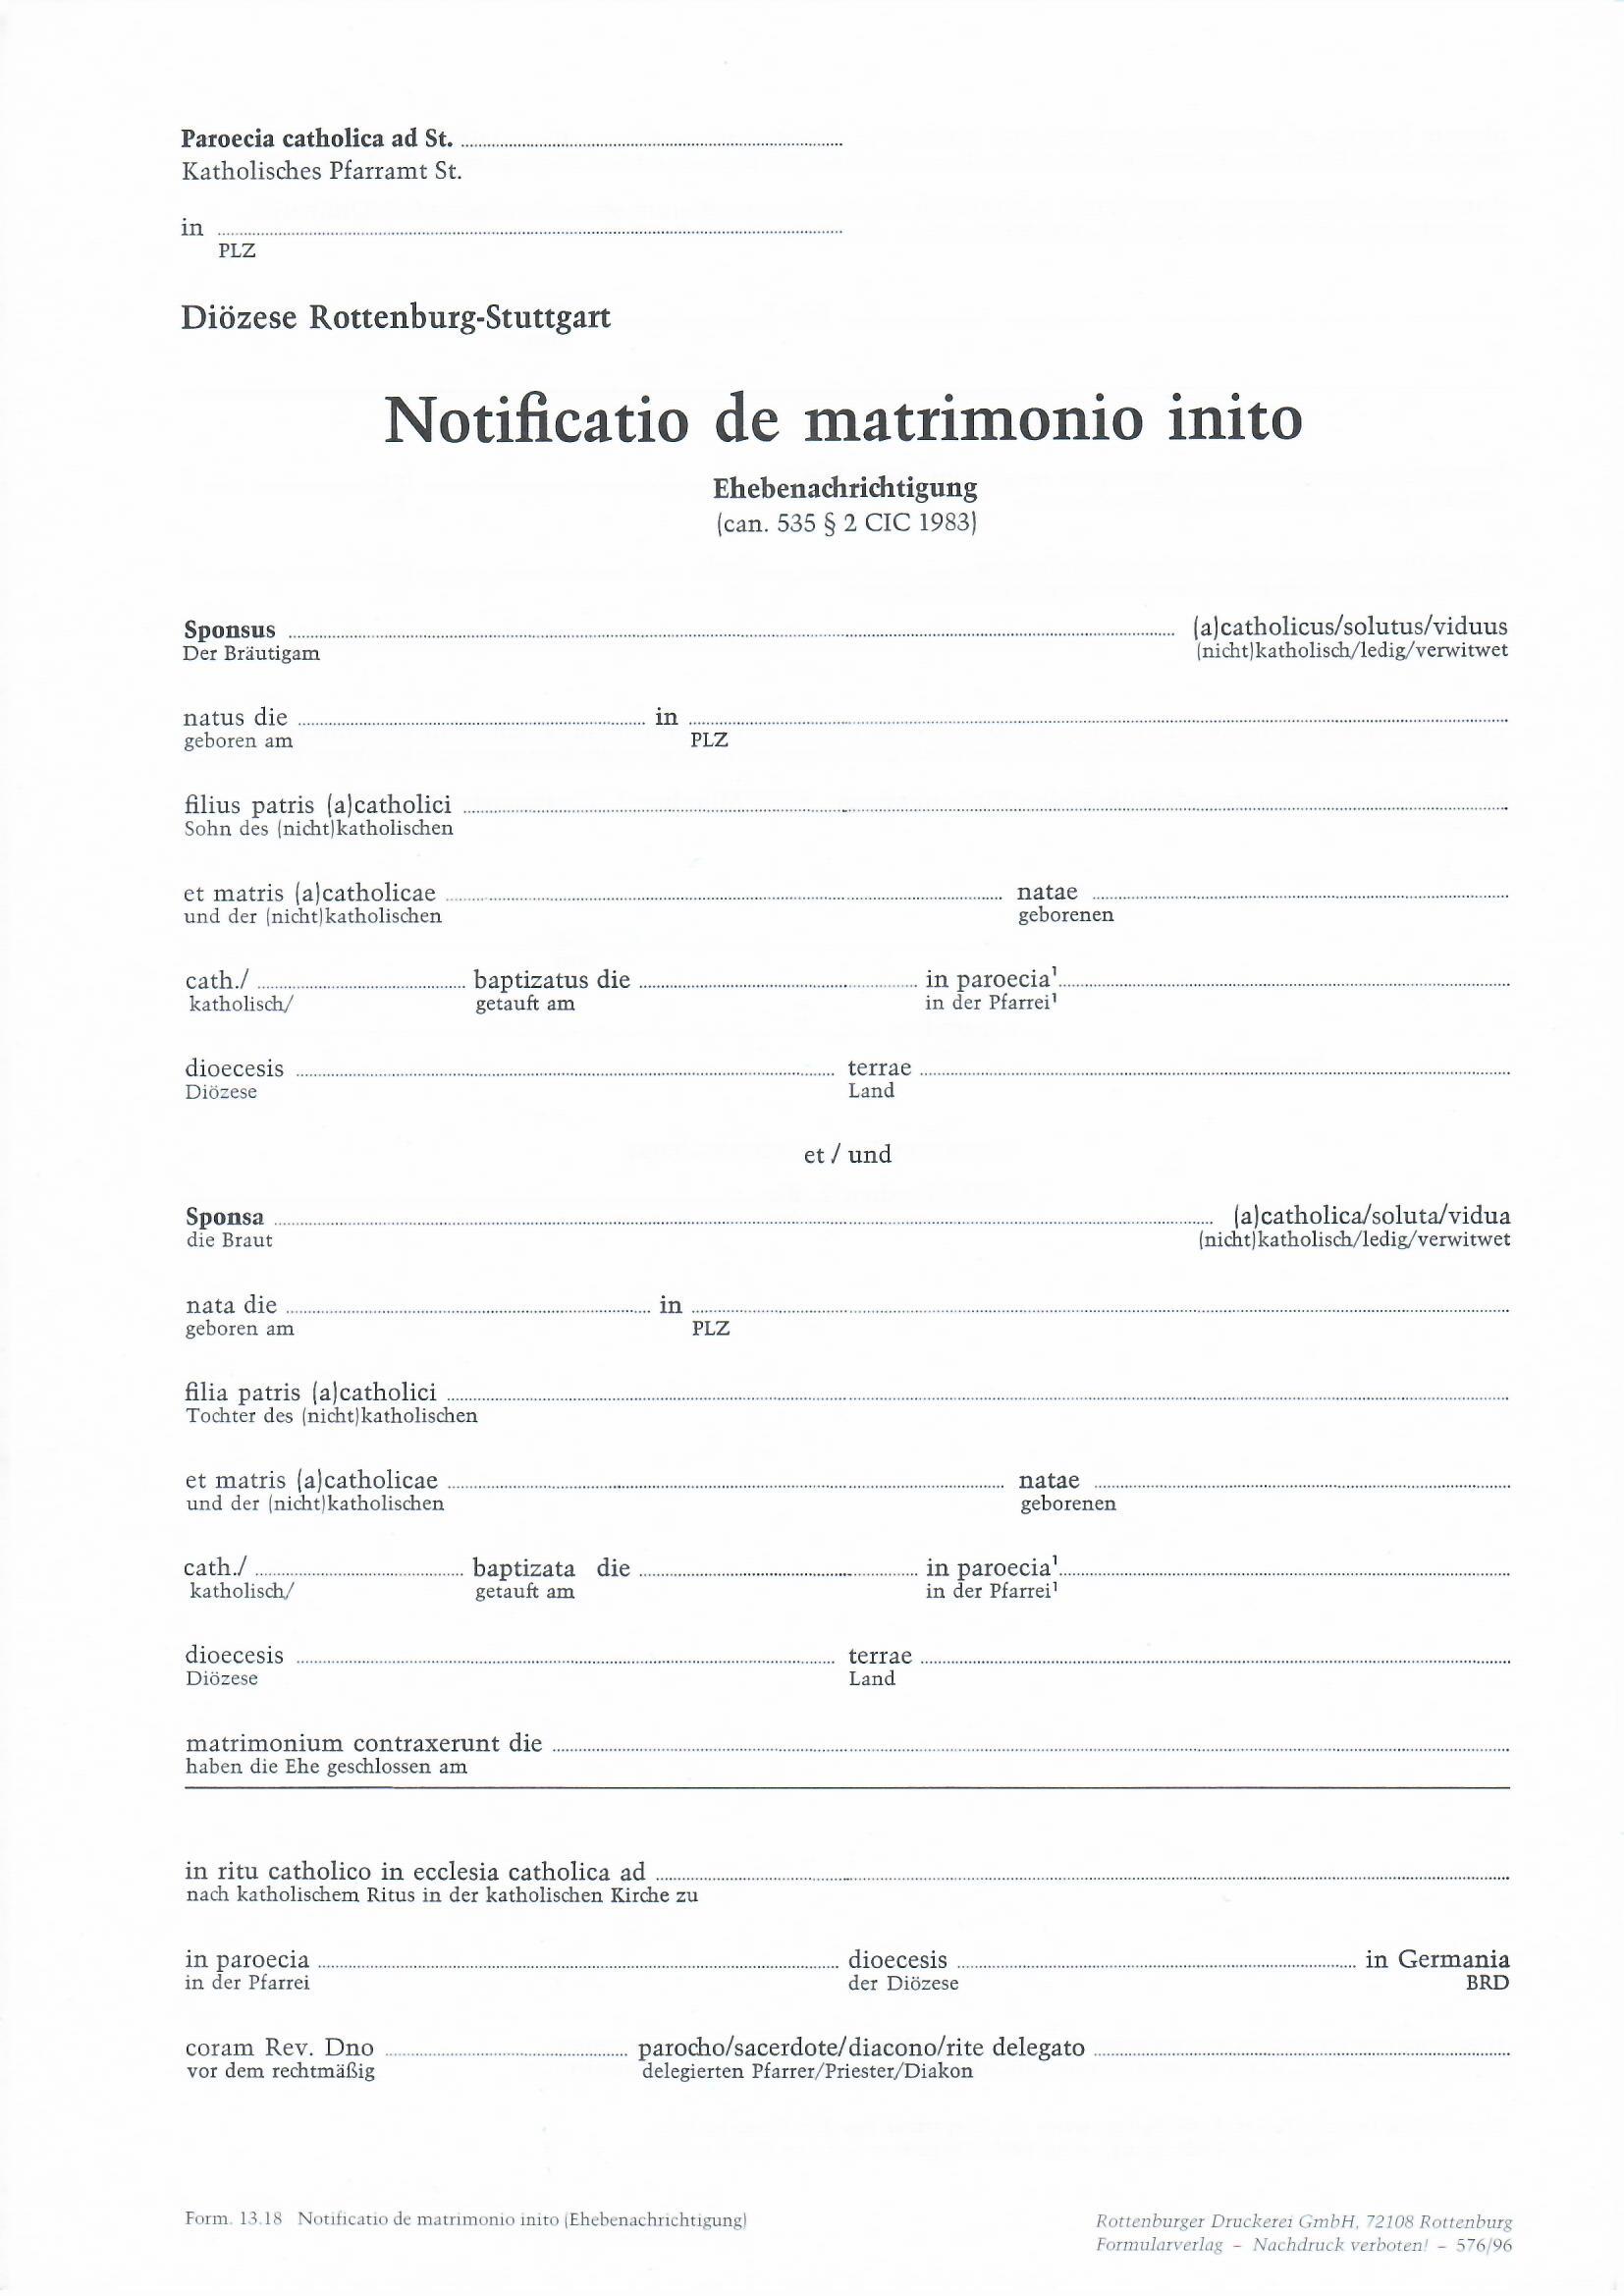 13.18 Notificatio de Matrimonio inito